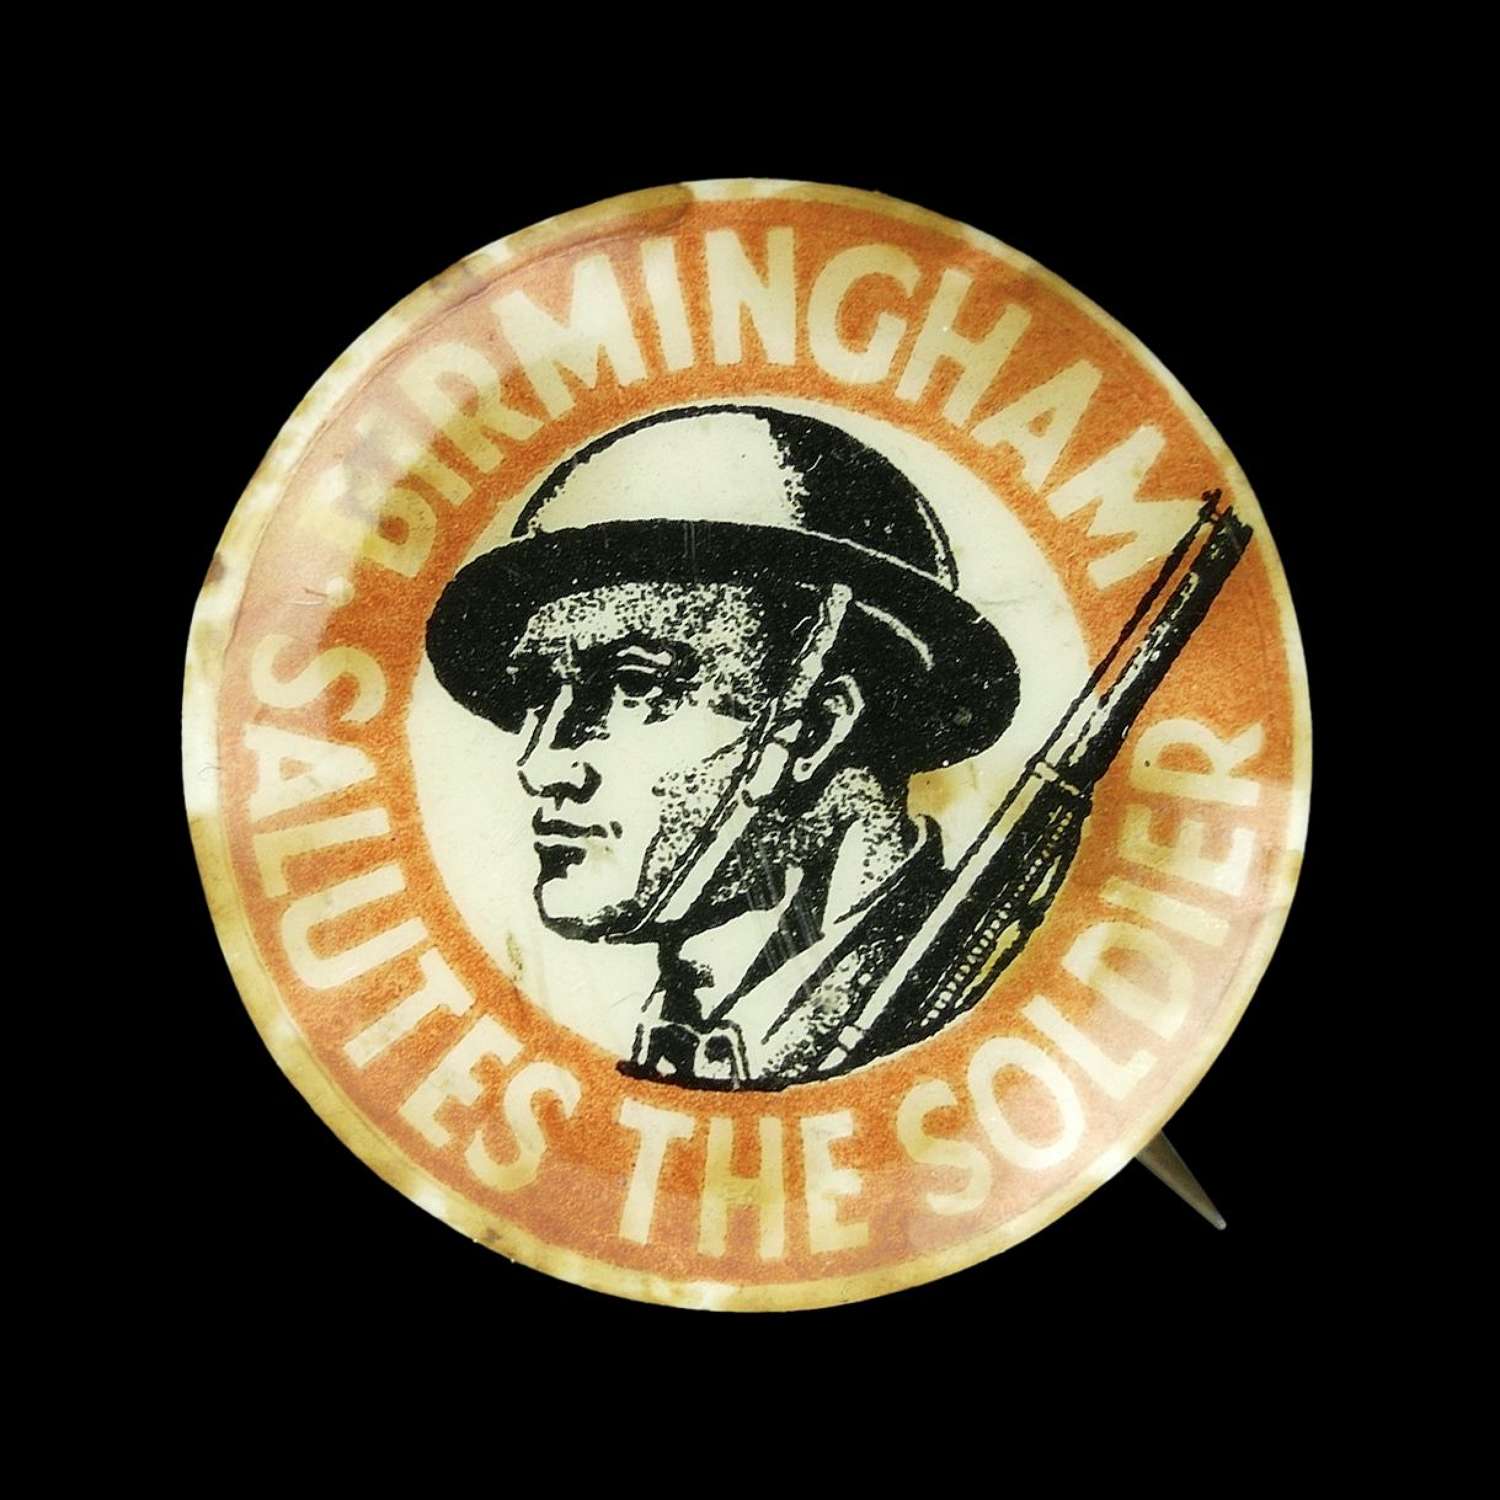 Birmingham Salutes The Soldier badge